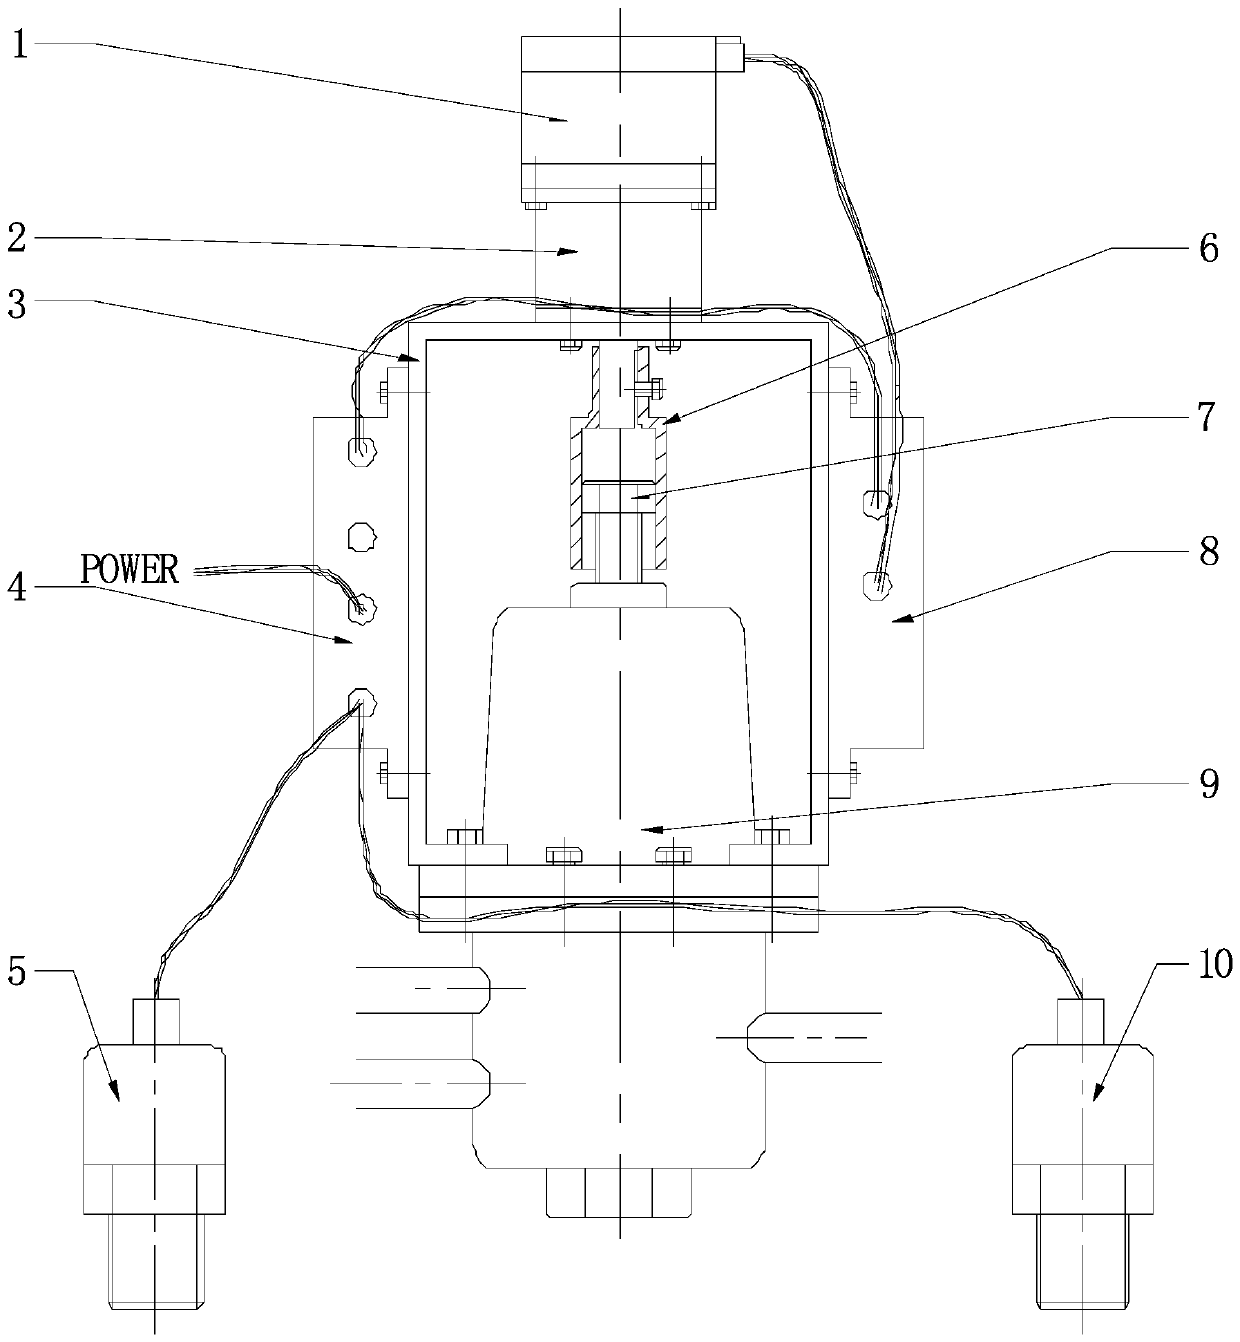 Intelligent adjusting device and method for pressure of reducing valve